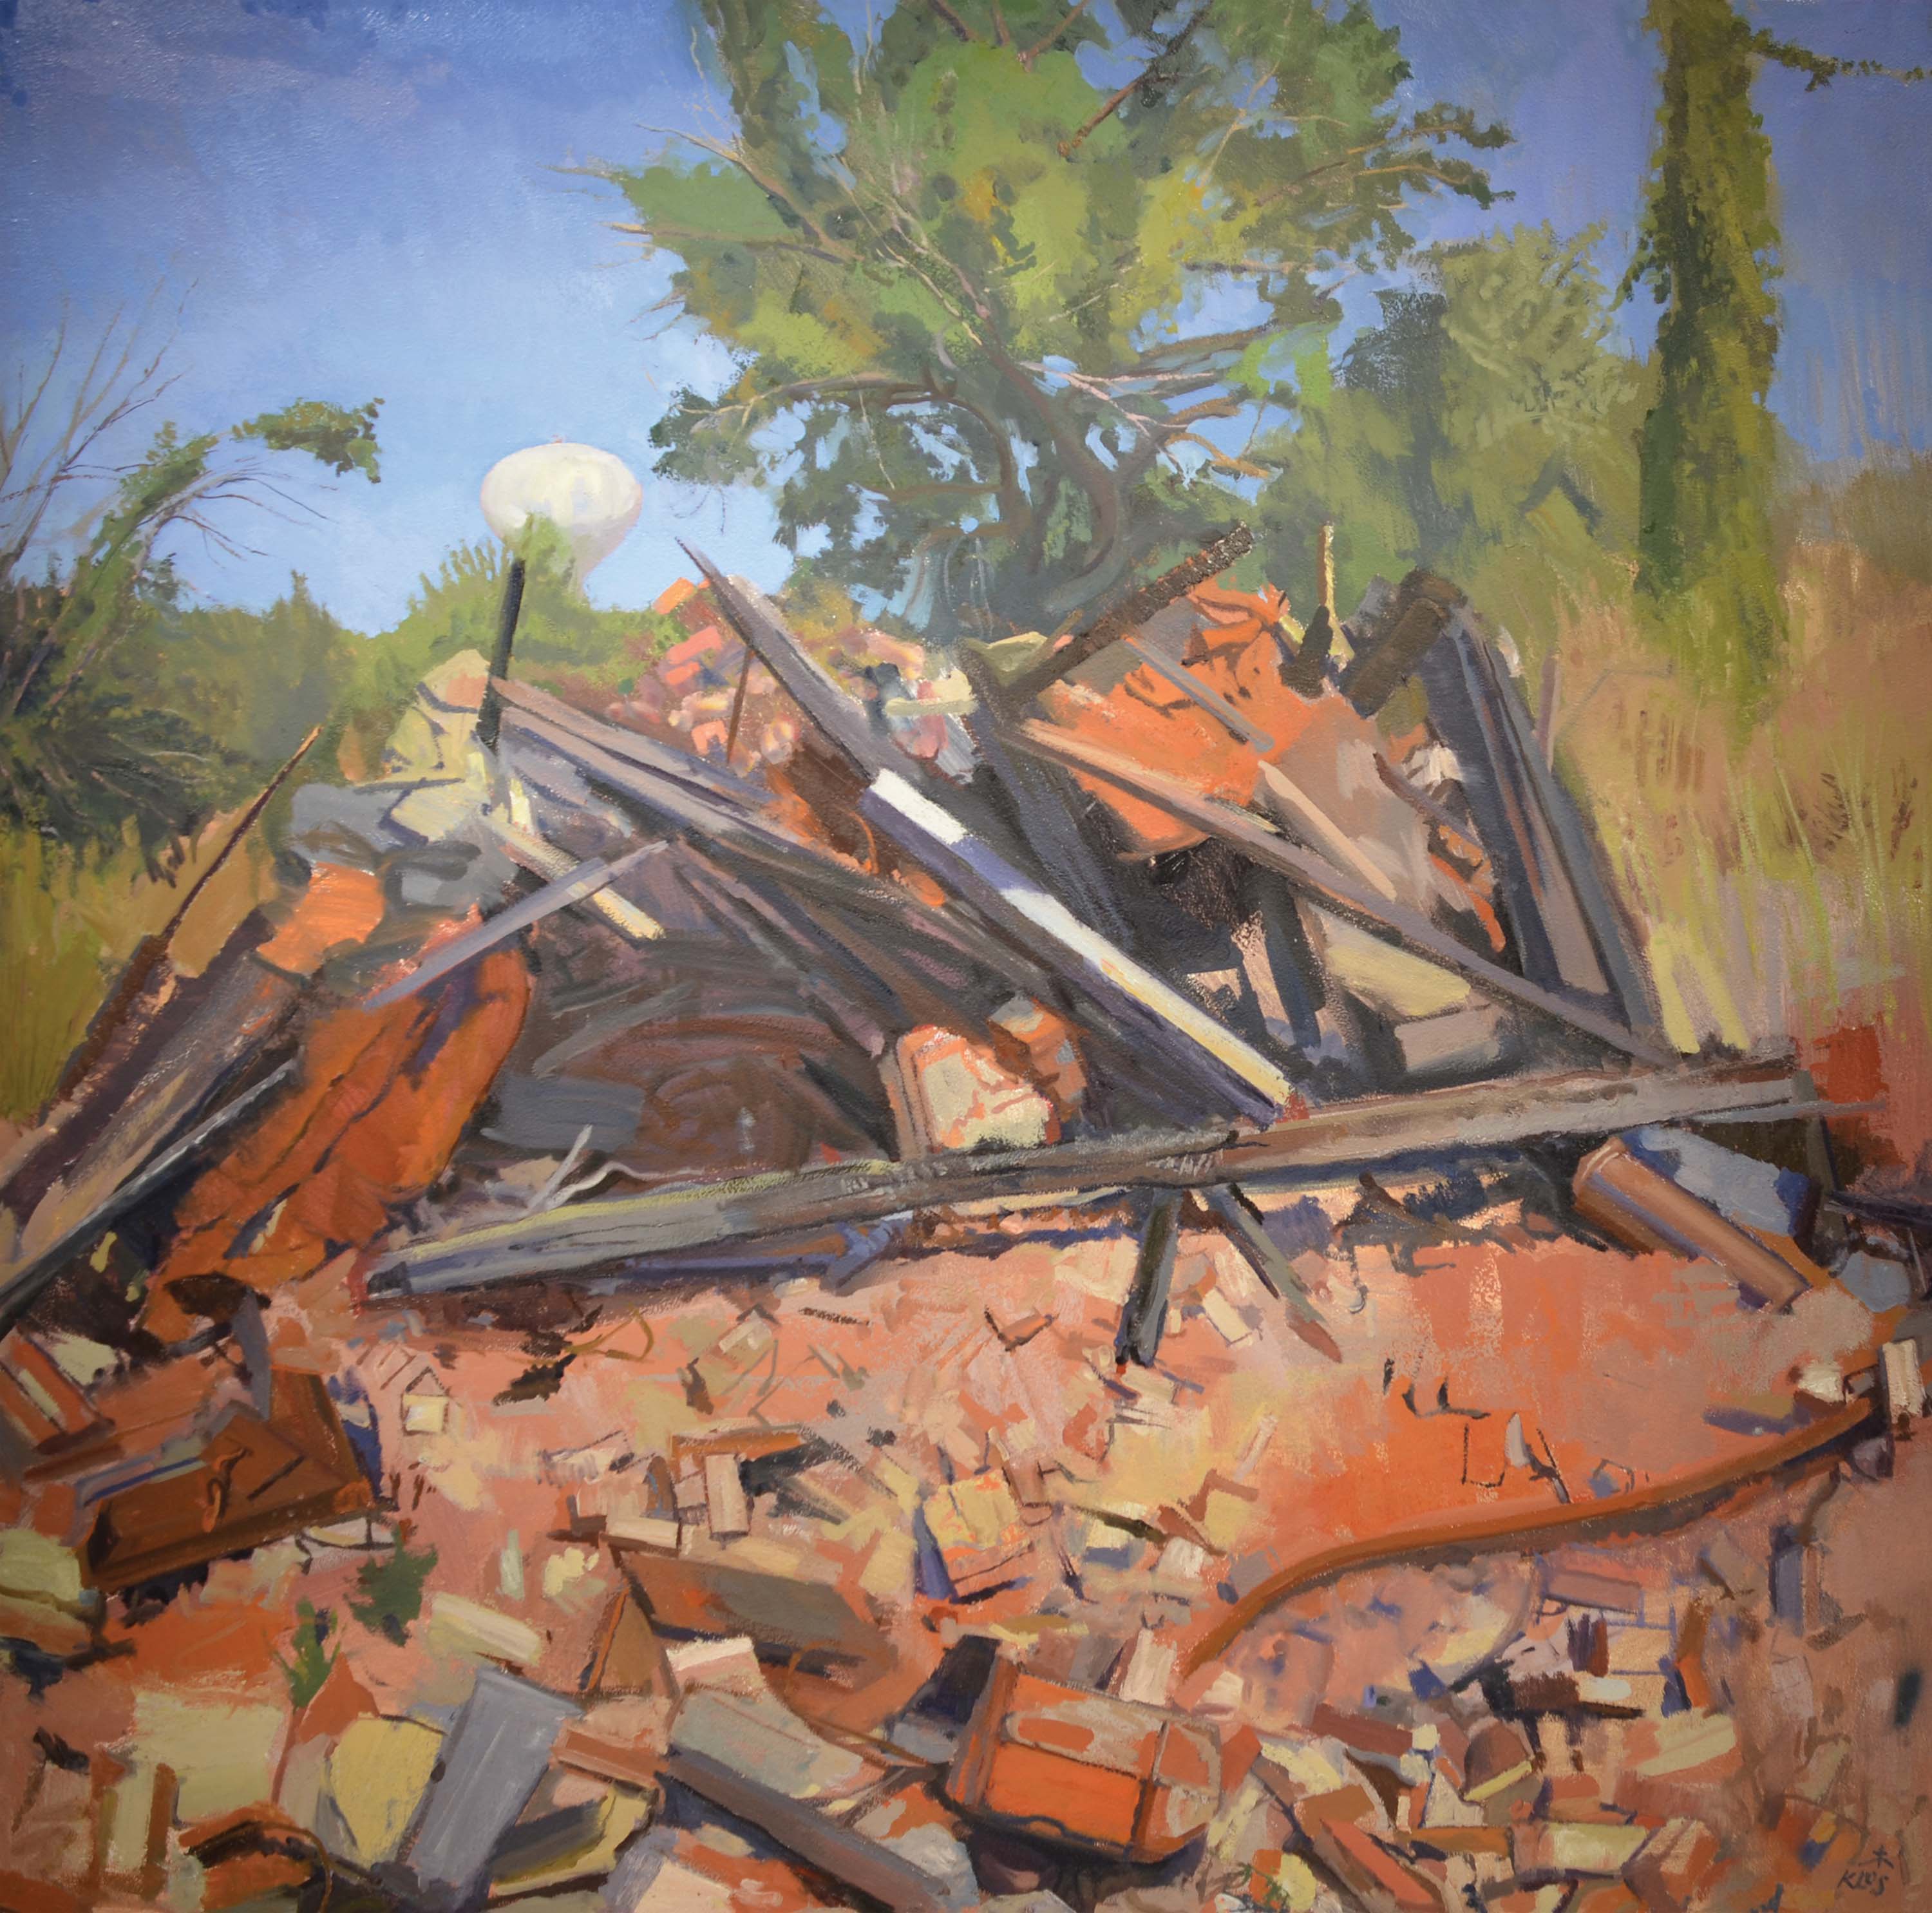 Fort Howard #7, Ruins / oil on panel / 48" x 48" / 2013